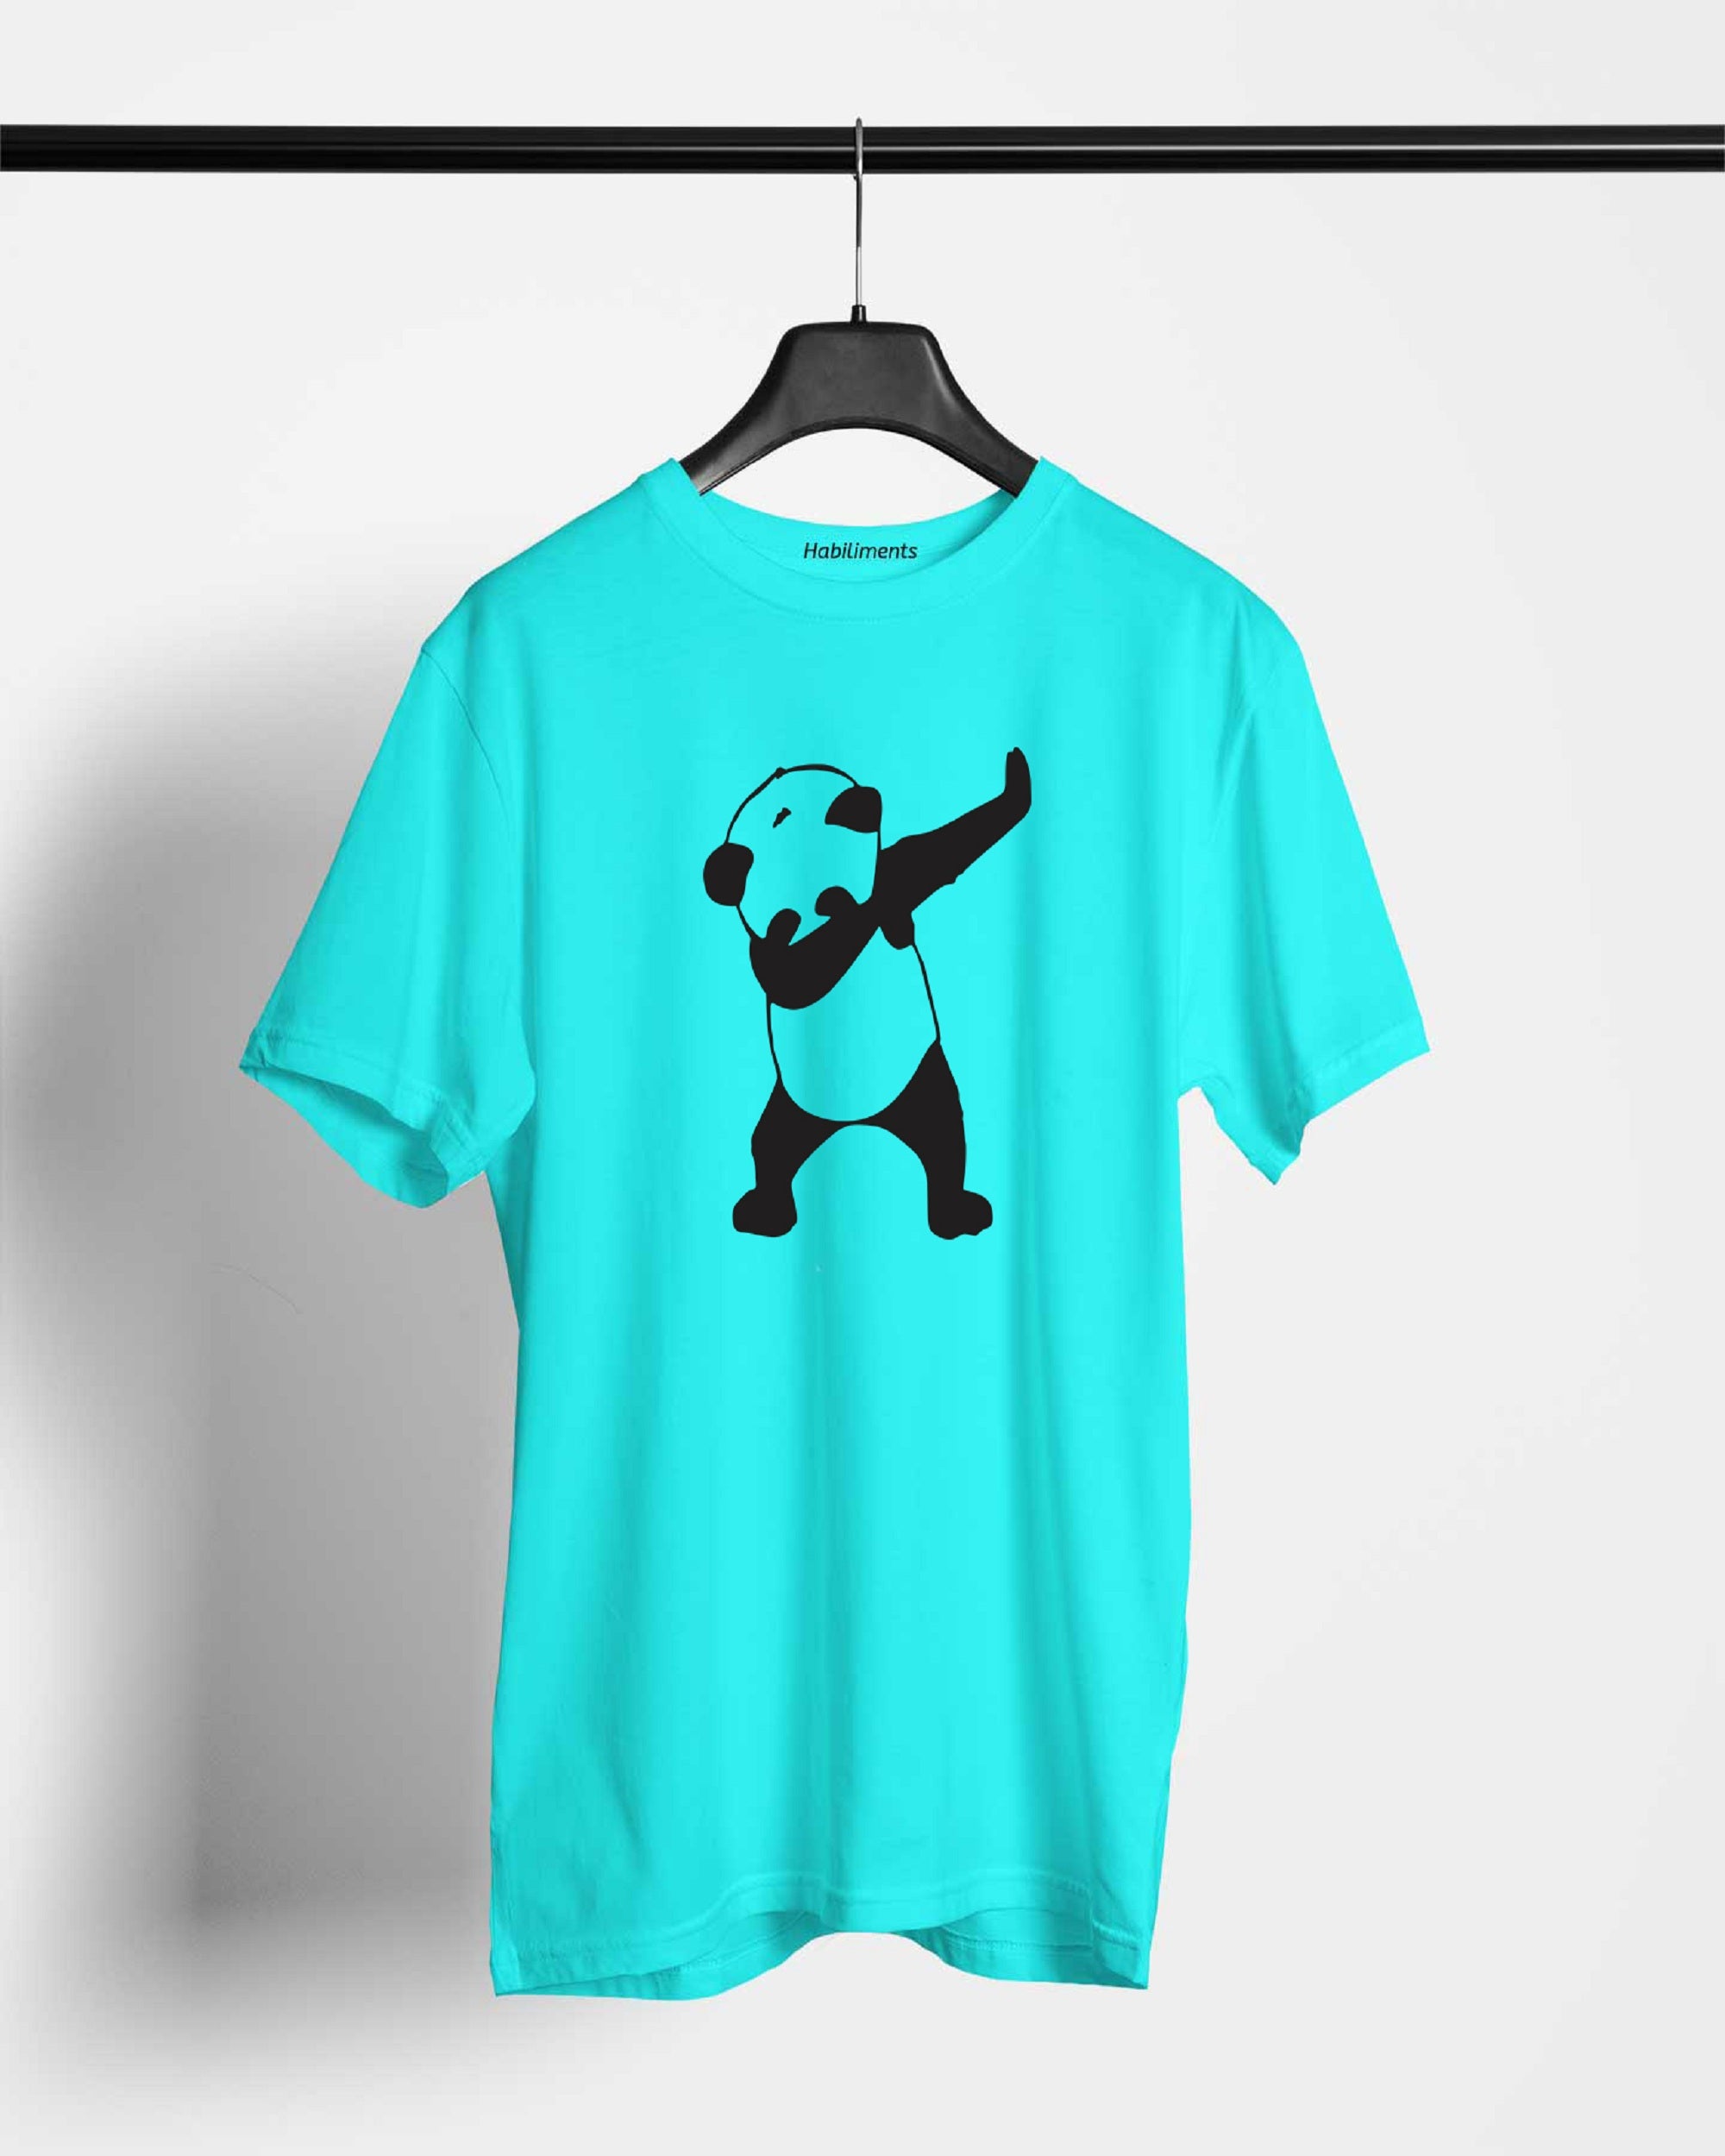 Dab Panda T-Shirts For Men || Sky Blue || Stylish Tshirts || 100% Cotton || Best T-Shirt For Men's